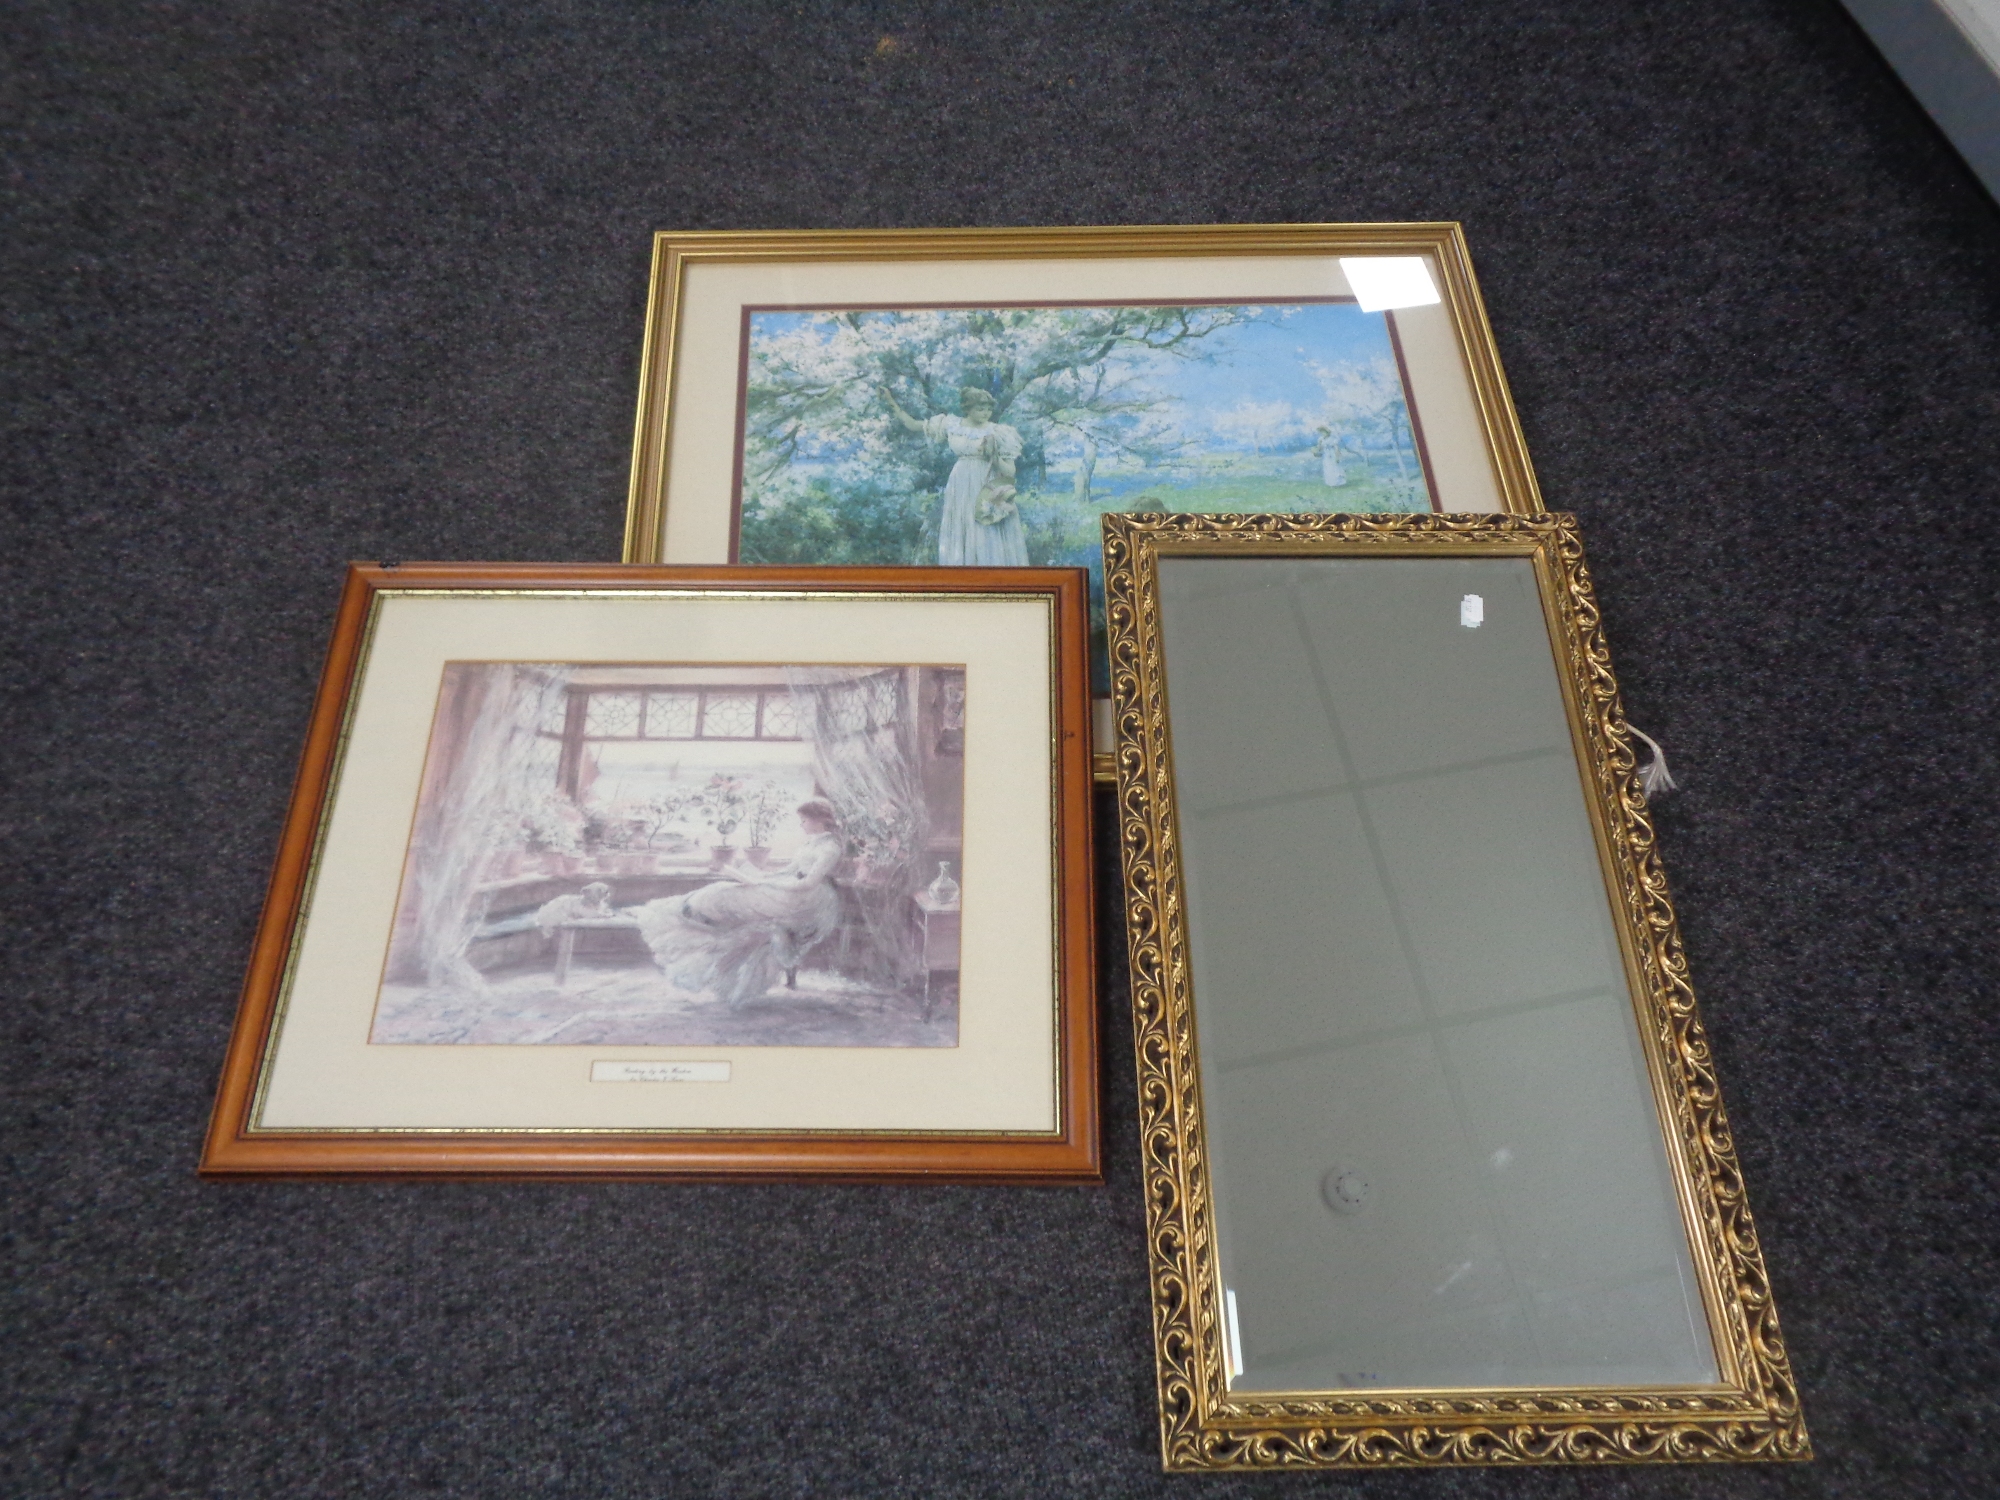 A gilt framed bevelled mirror together with two further framed prints